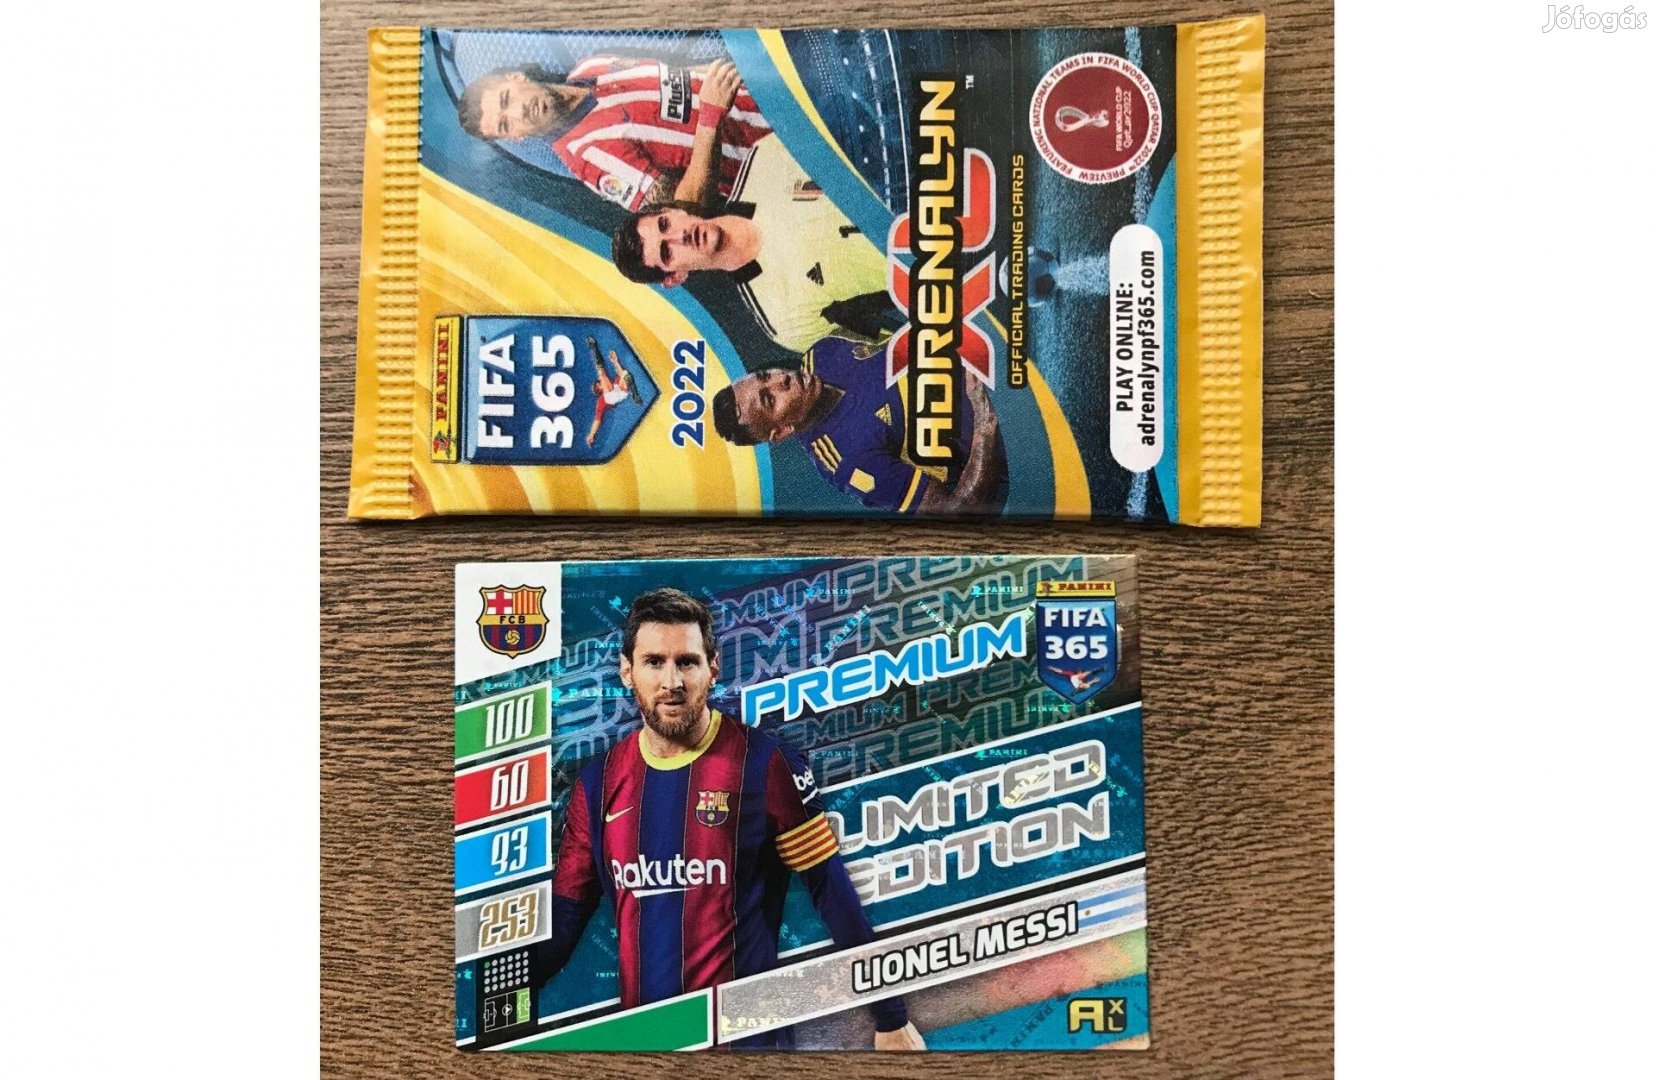 Panini fifa 365 2021/22 Messi Premium limited card